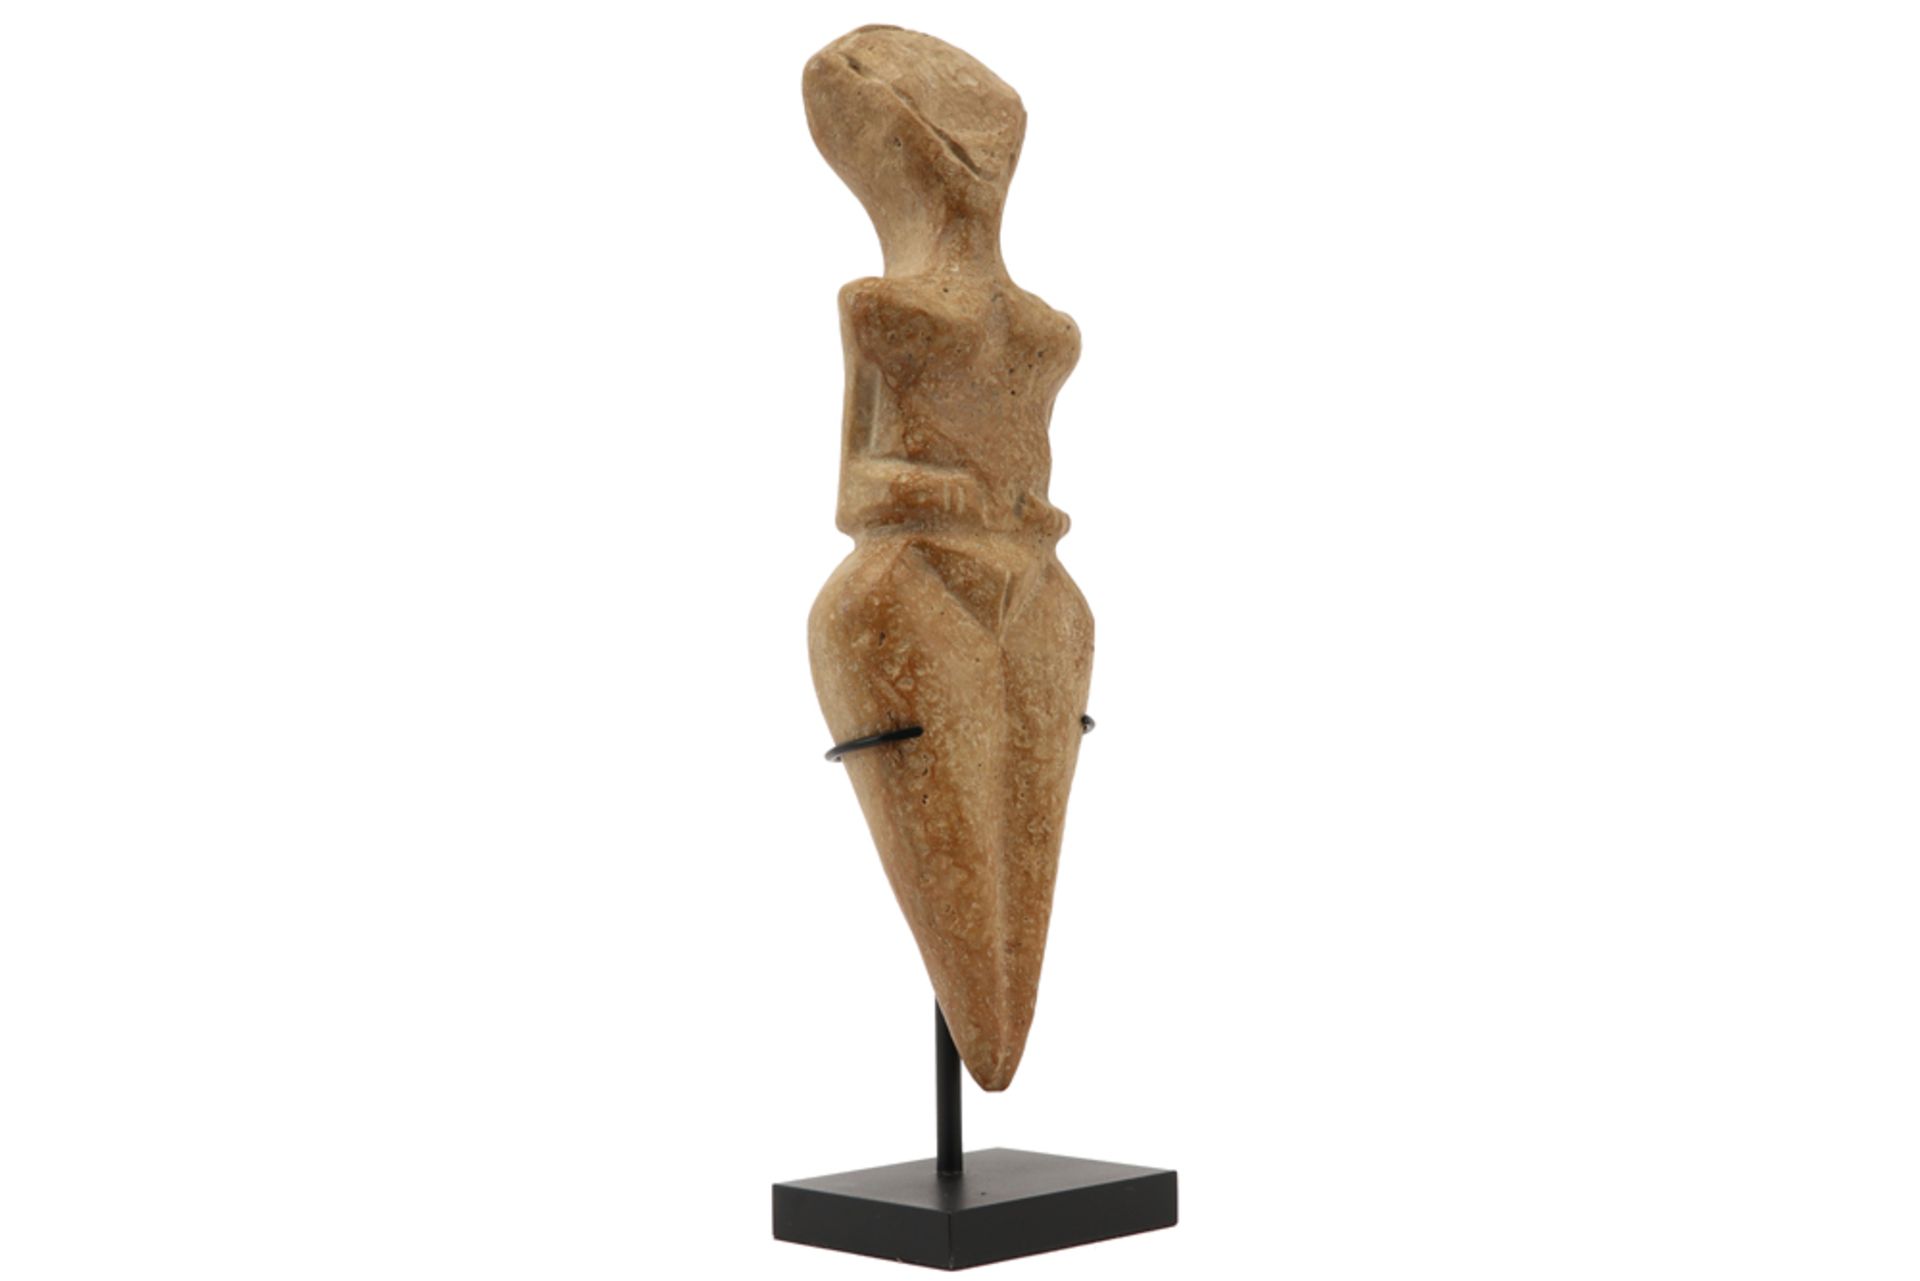 Donau Culture stone female fertility idol ||DONAU - CULTUUR vrouwelijk vruchtbaarheidsidool in steen - Image 2 of 3